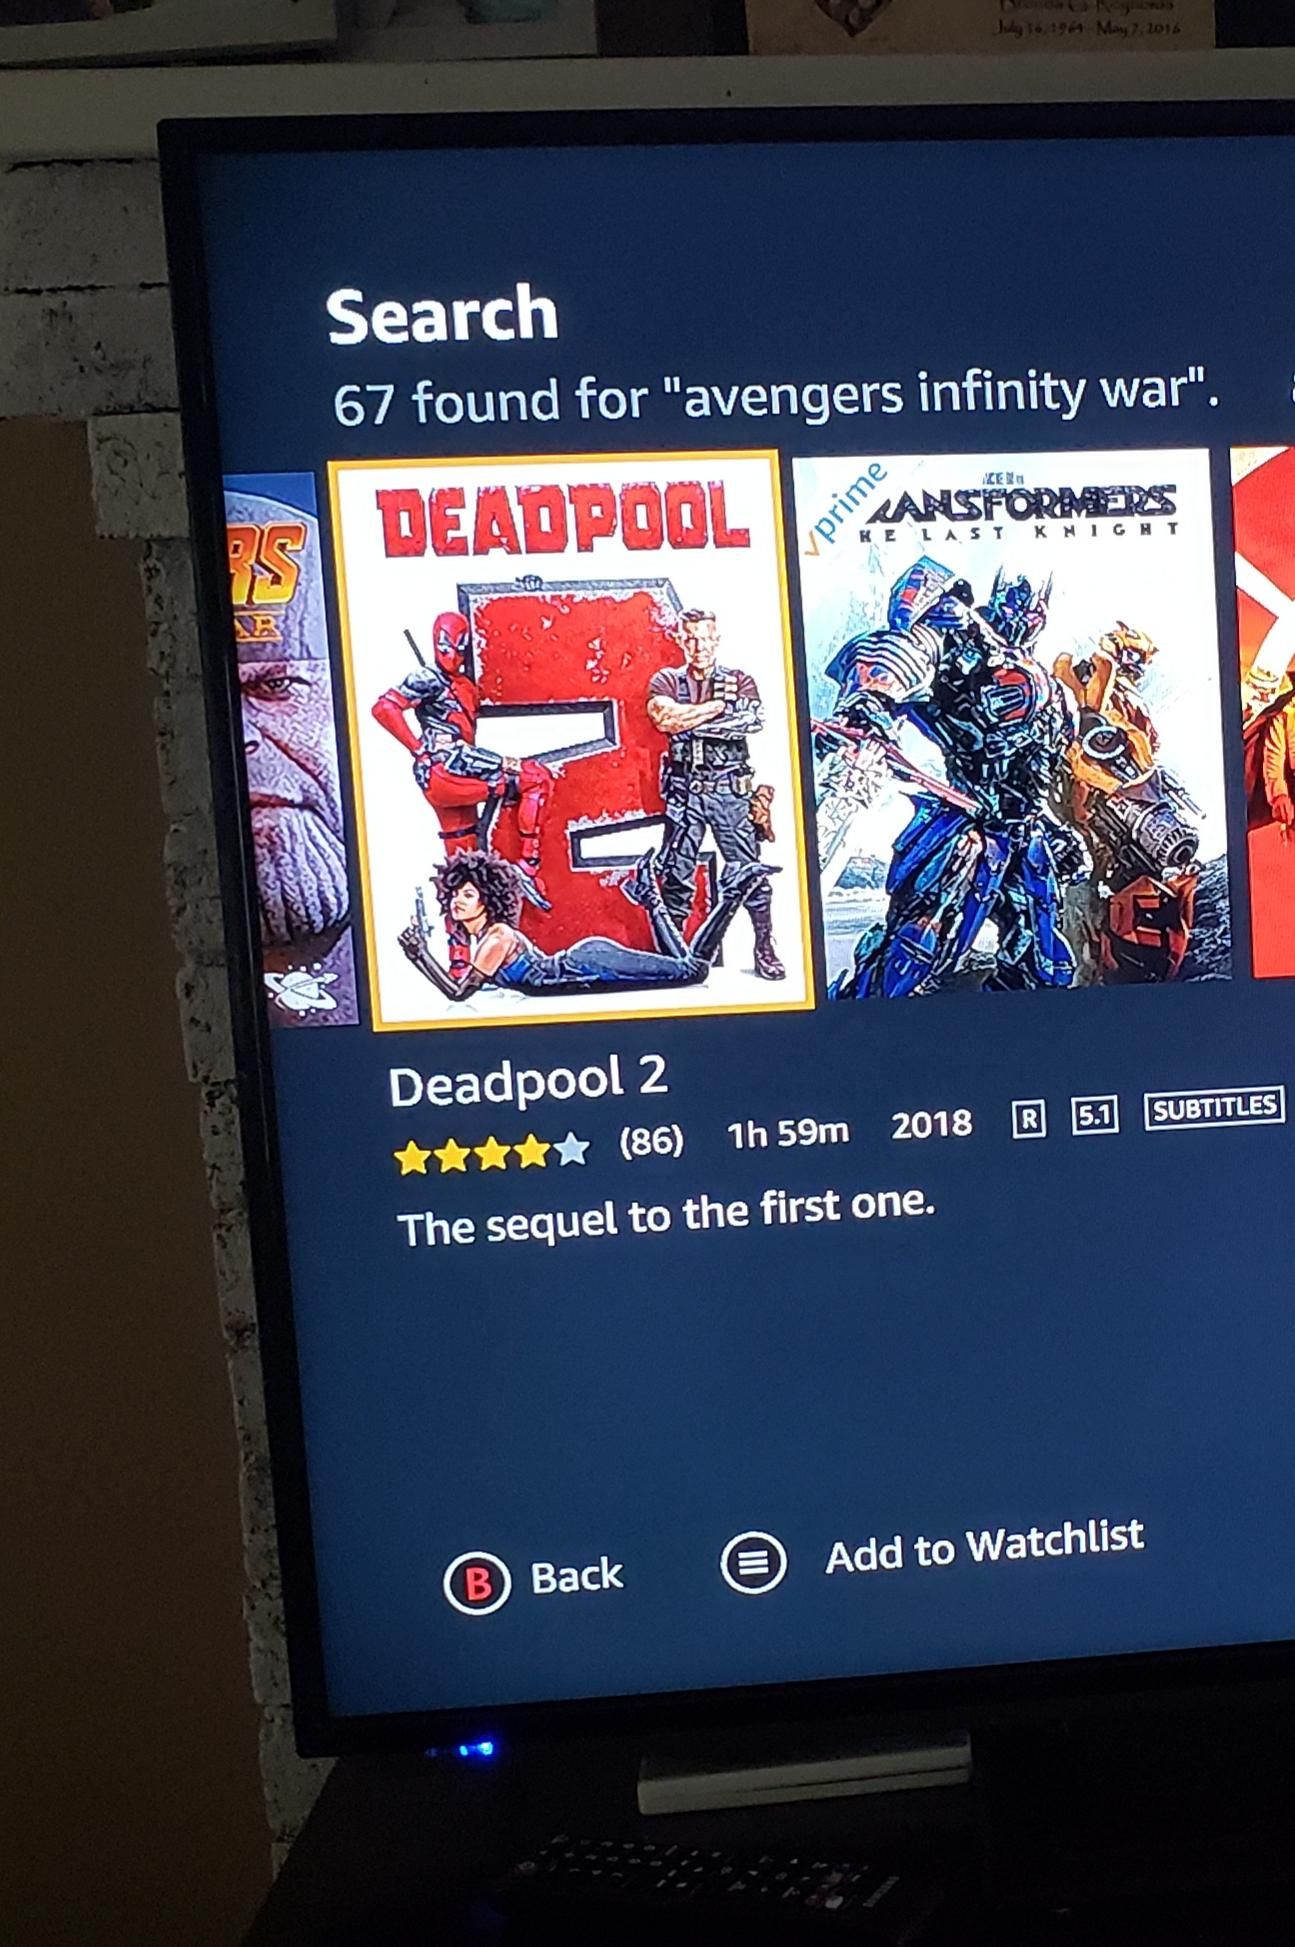 Thanks Amazon for the accurate description of deadpool 2. I had no idea